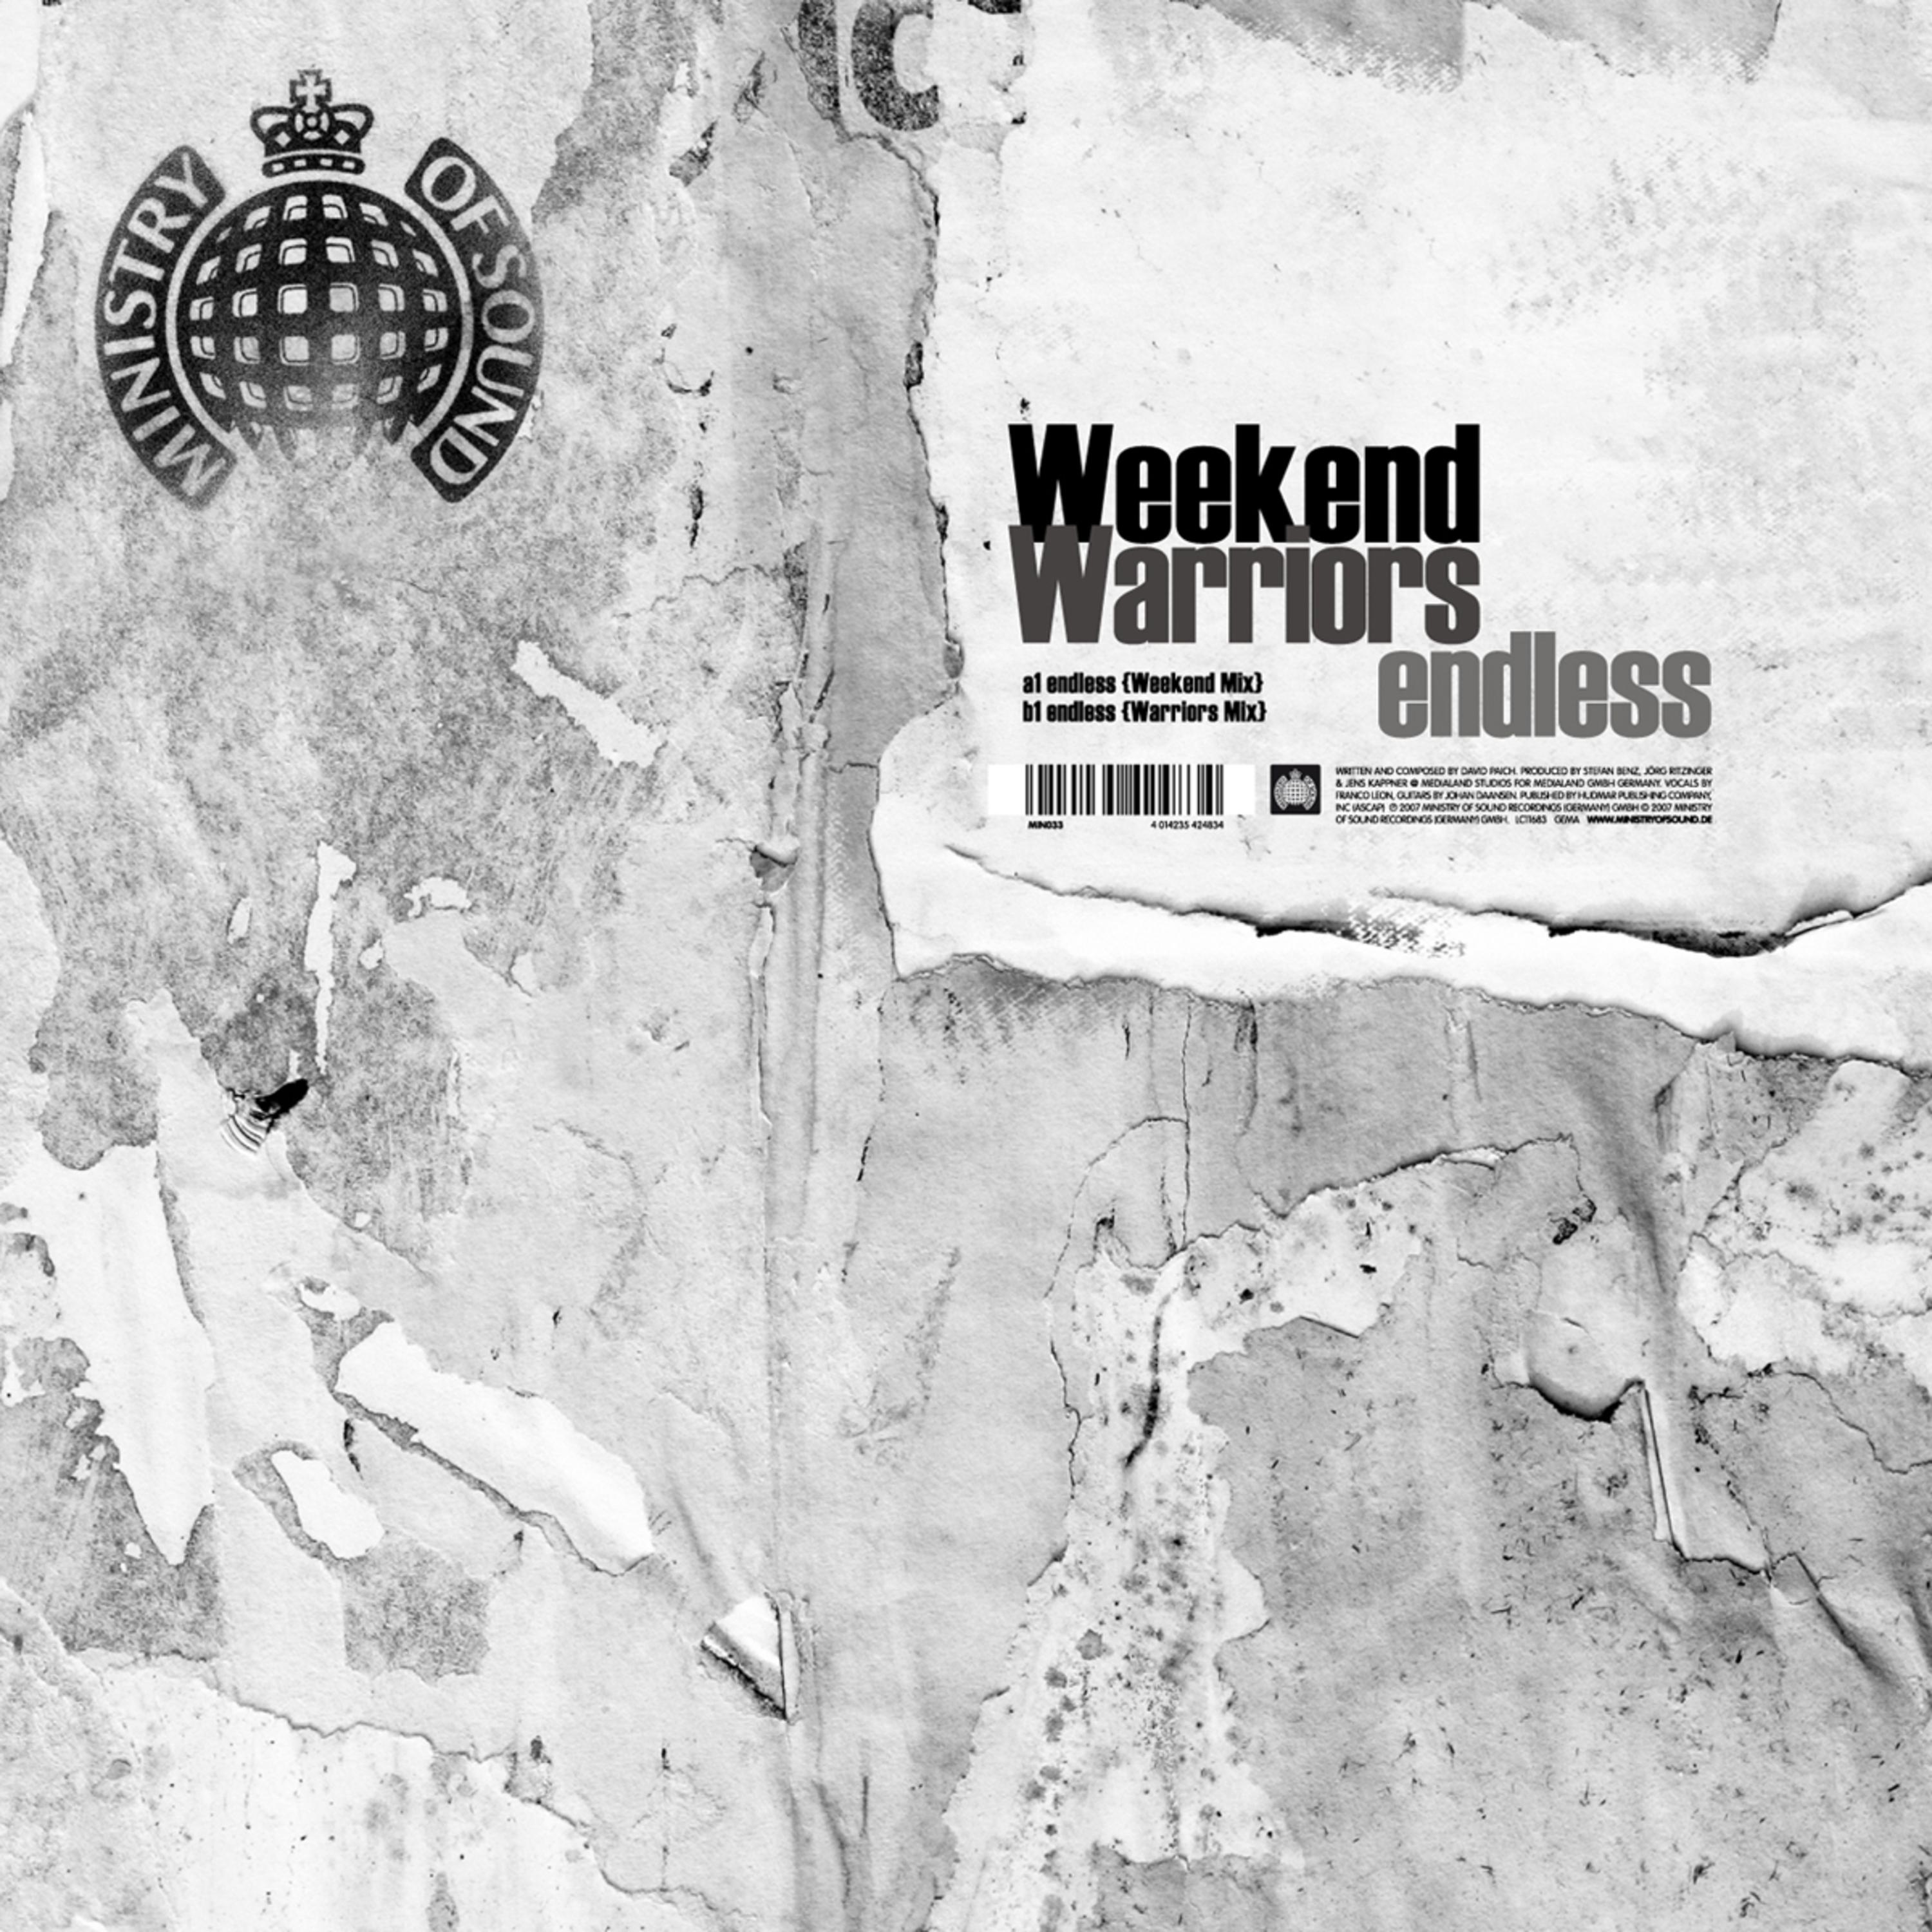 Endless (Weekend Mix)